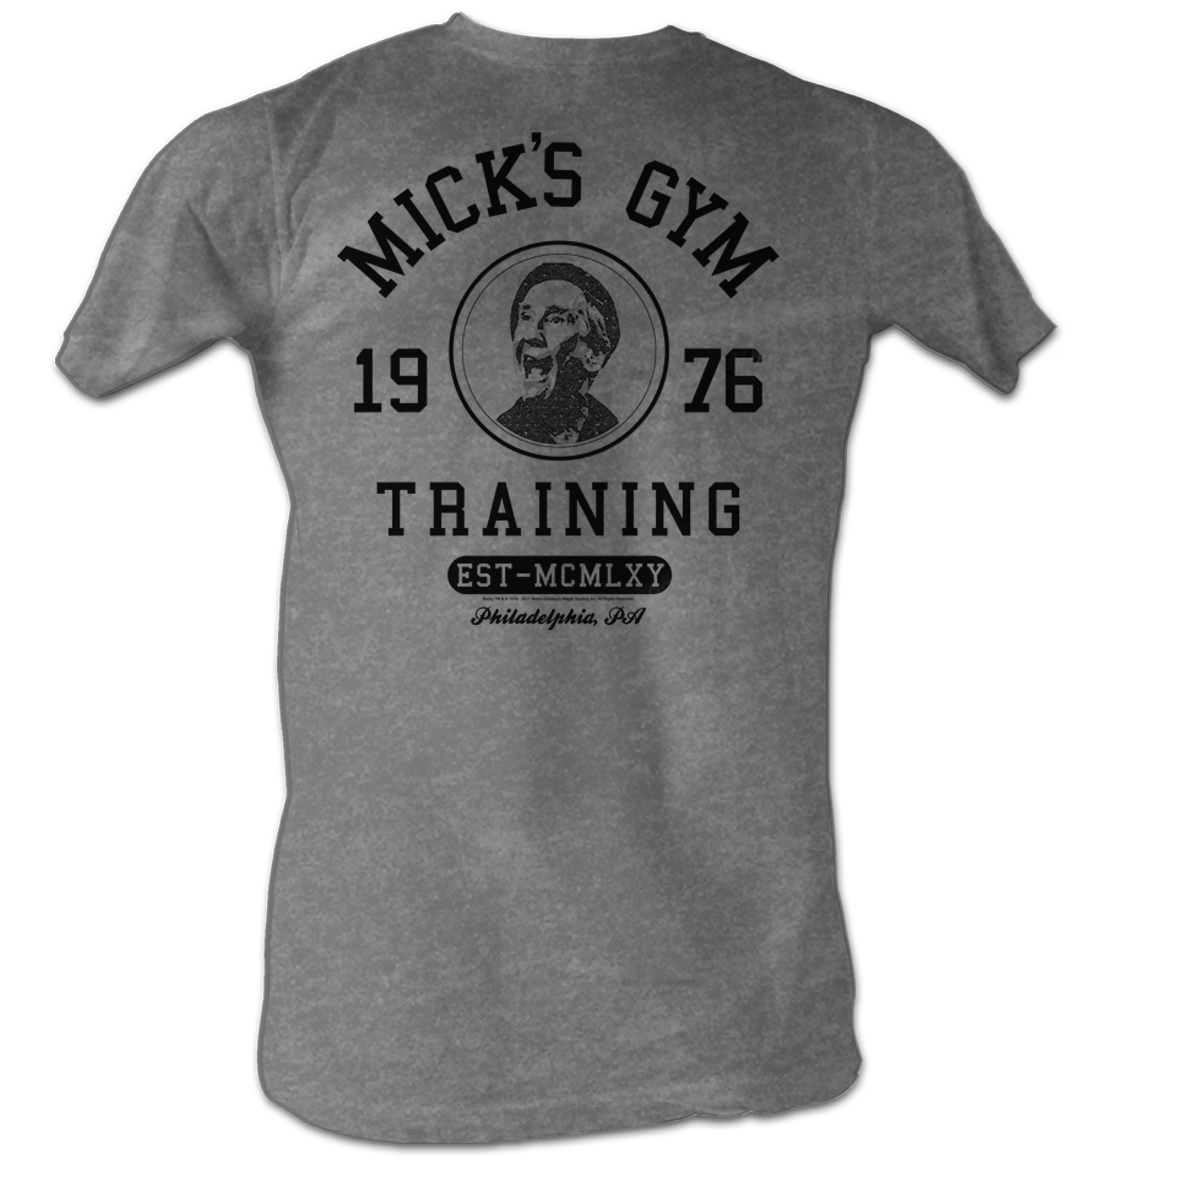 Rocky: Mick’s Gym Shirt – Shop Retro Active and Retro Active Part 2